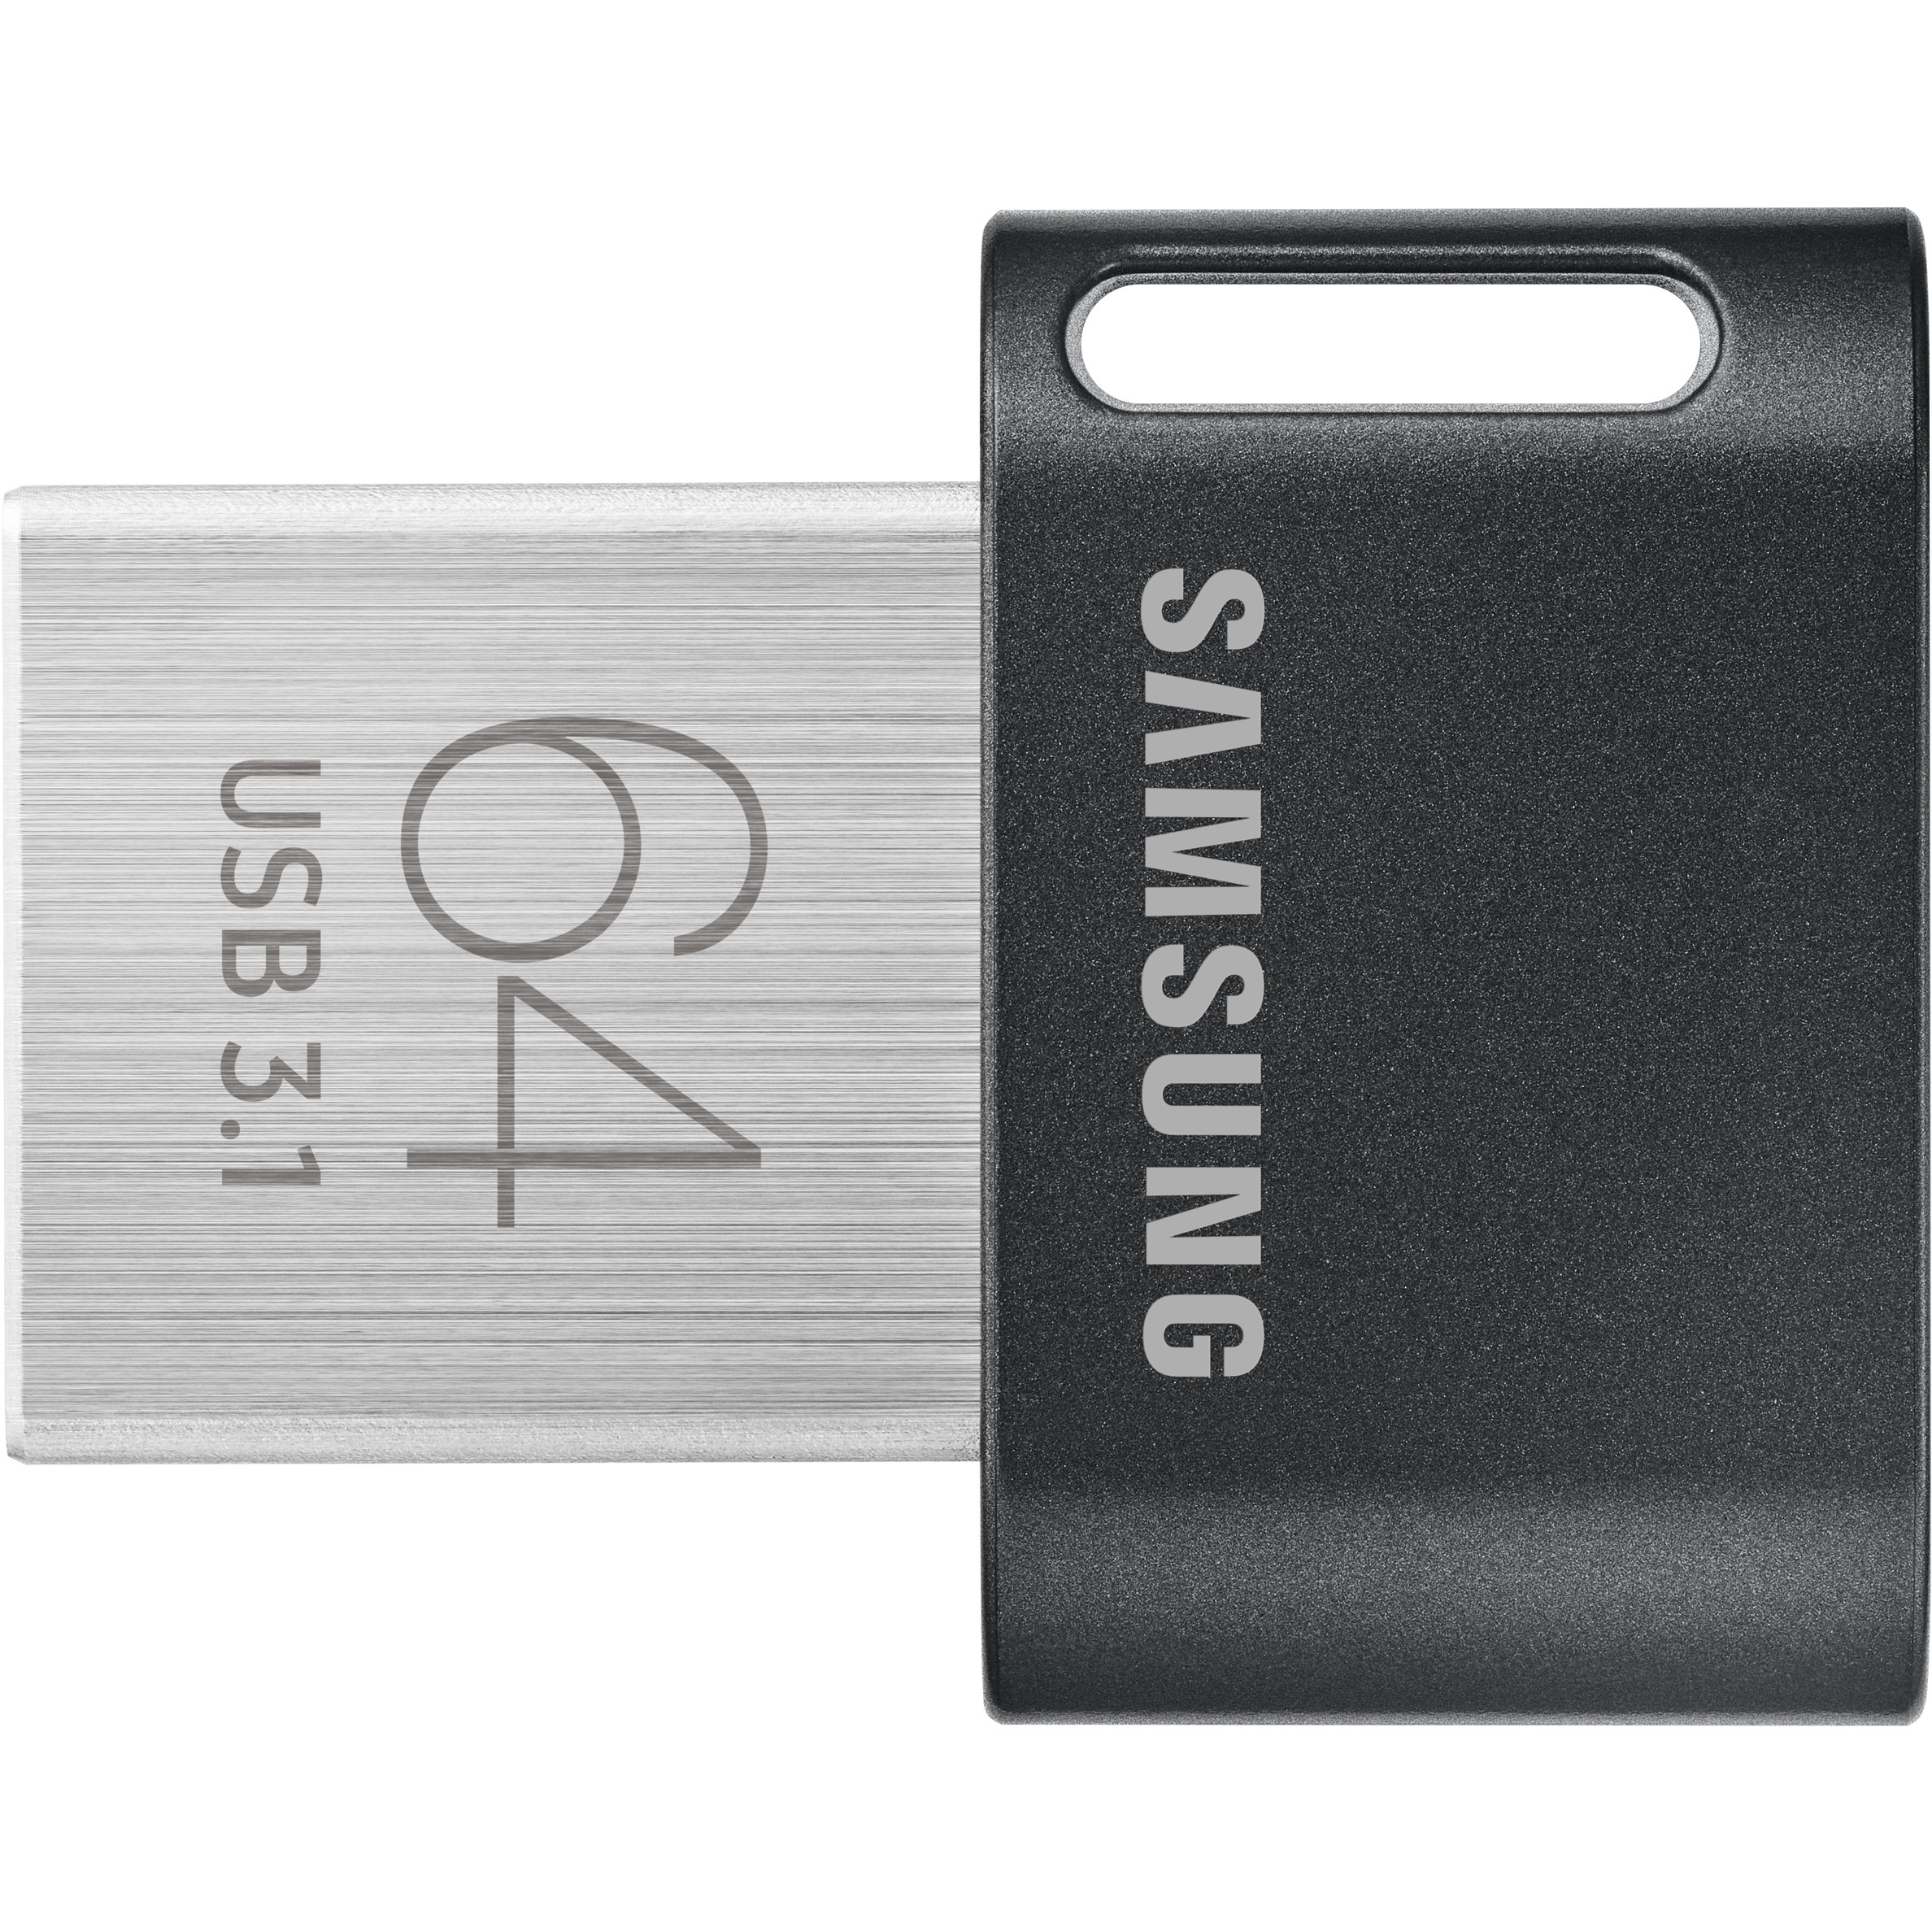 Samsung MUF-64AB USB flash drive - MUF-64AB/APC